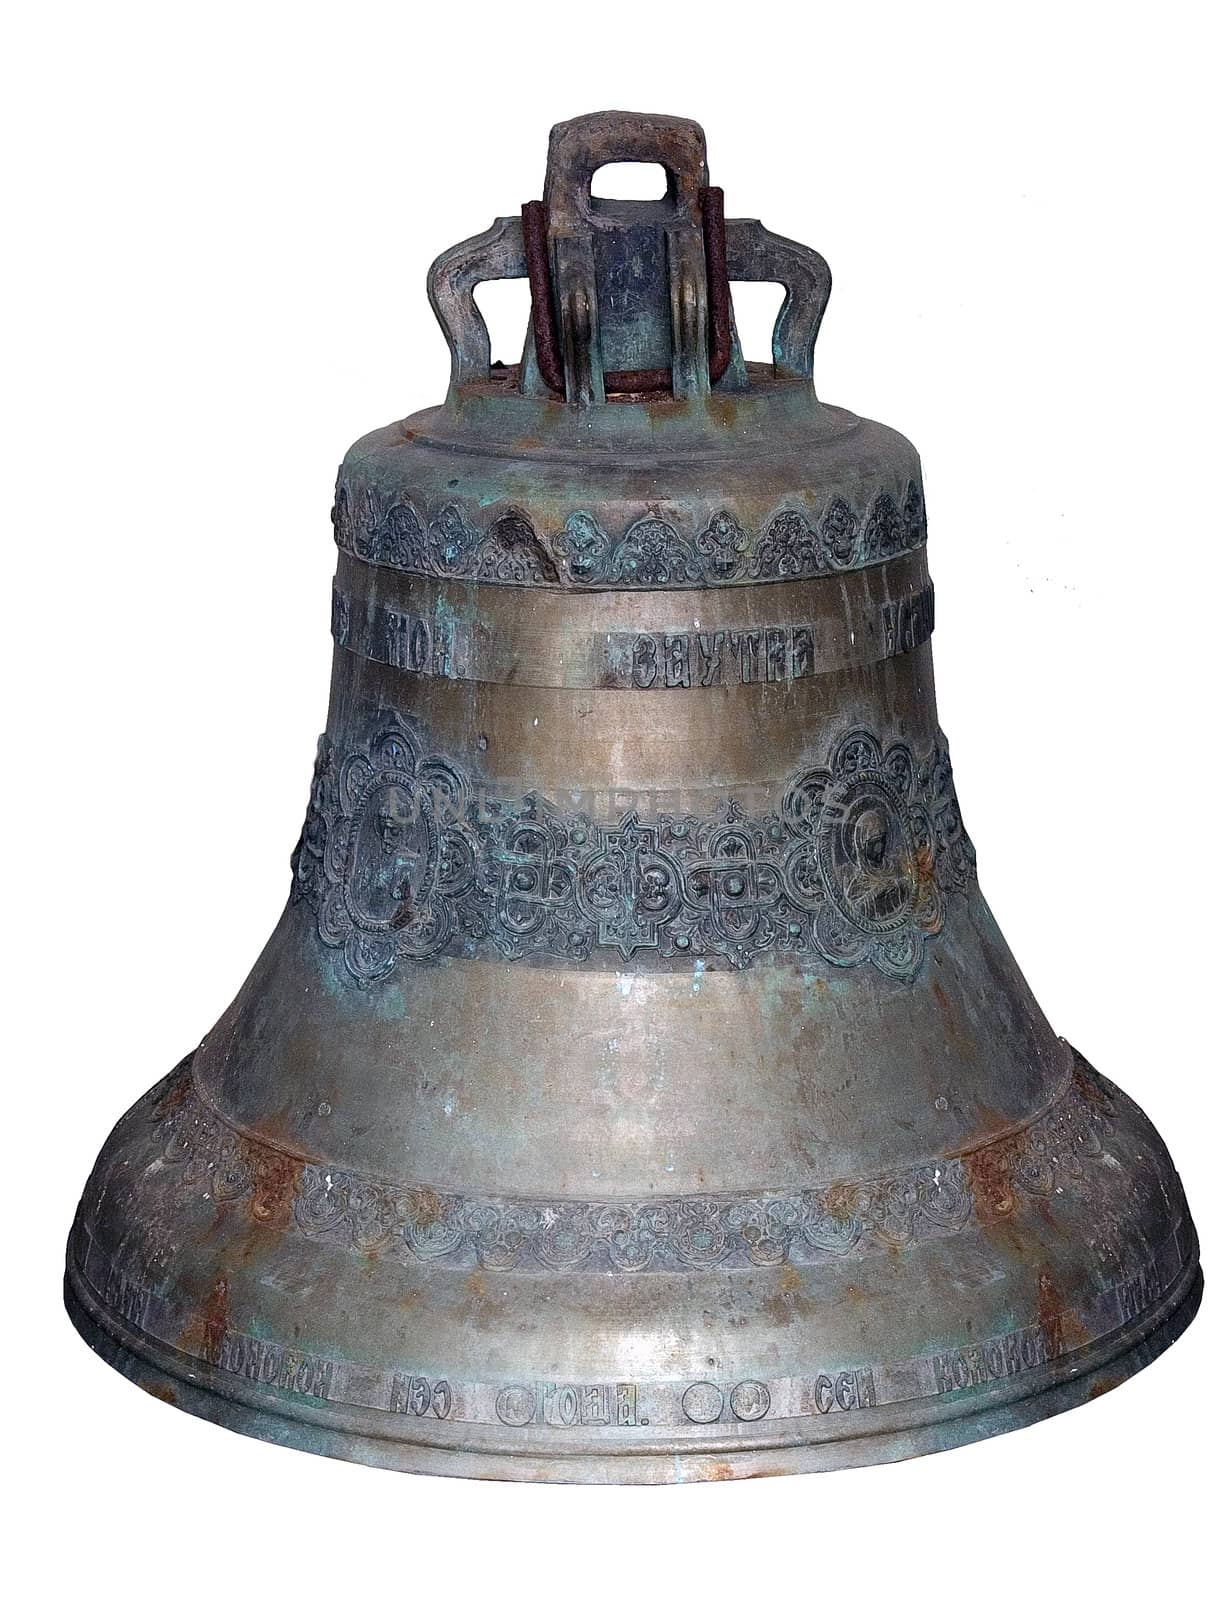 Church bell by goro